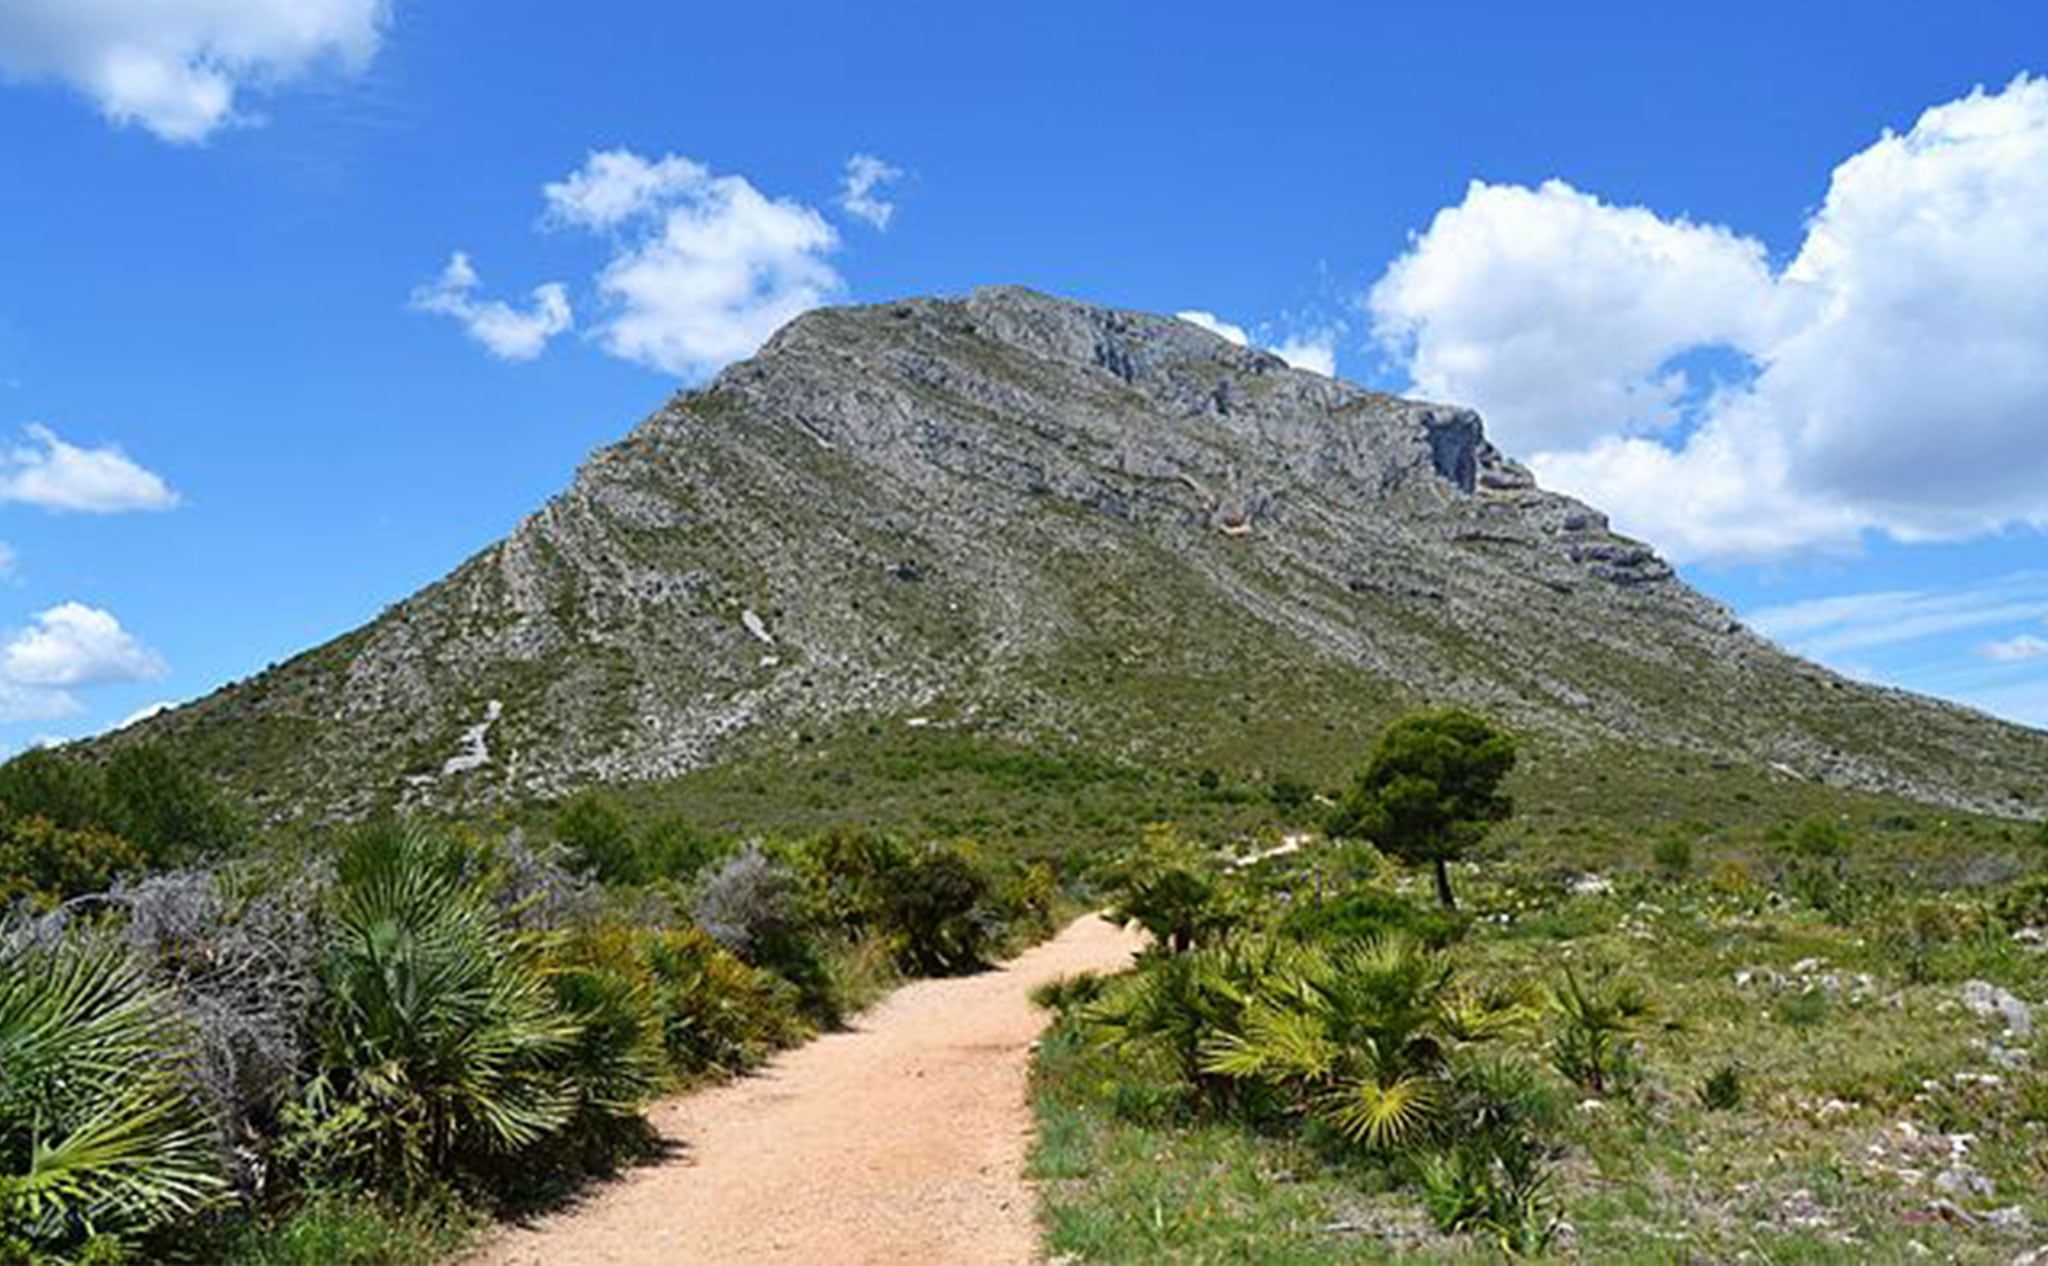  Parque Natural del Montgó